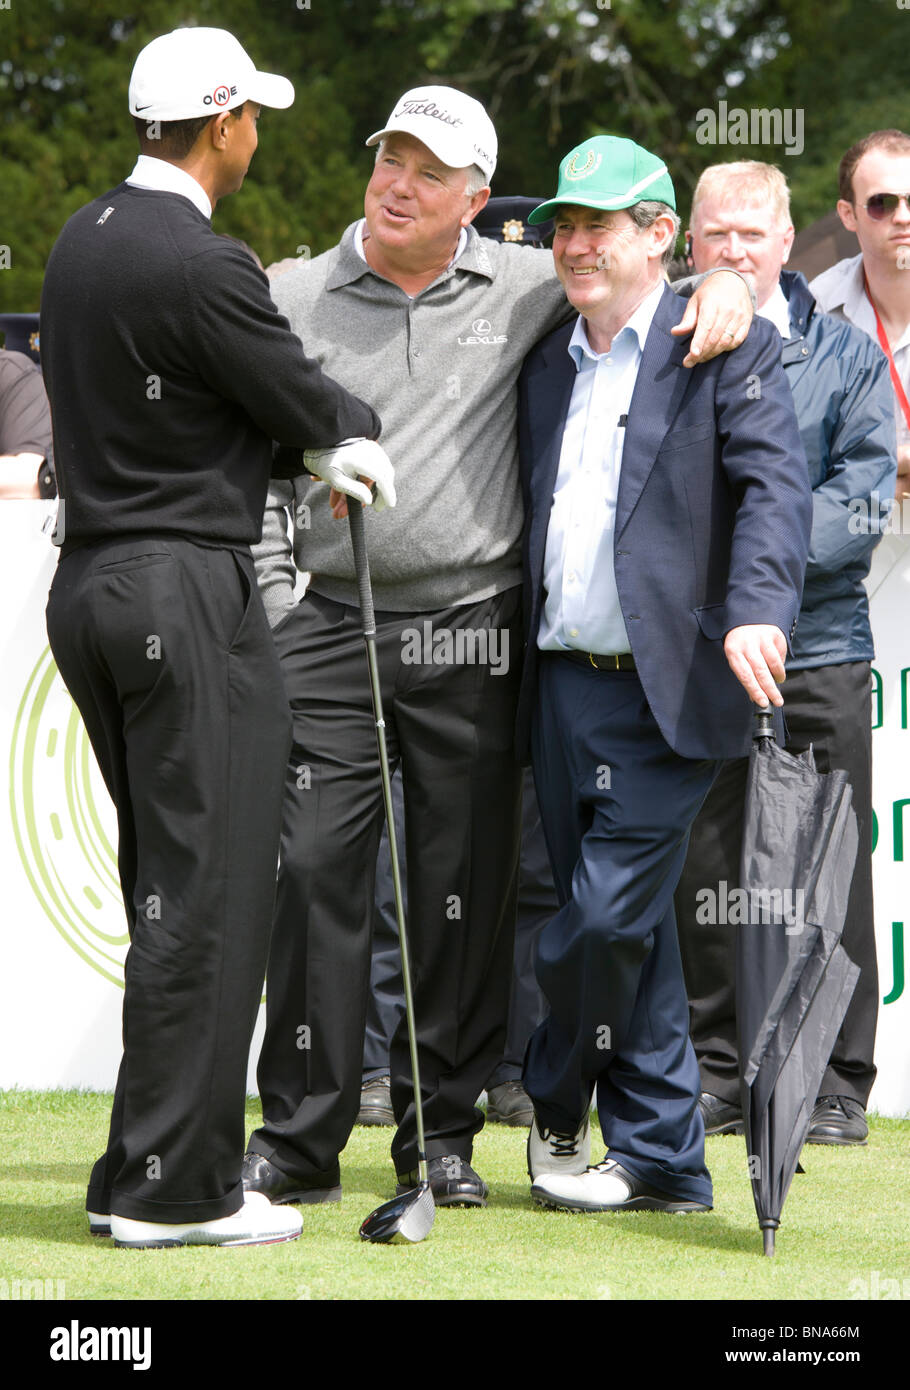 Tiger Woods, Mark O'Meara and JP McManus Pro-Am Golf Tournament, Adare  Ireland 6th July 2010 Stock Photo - Alamy